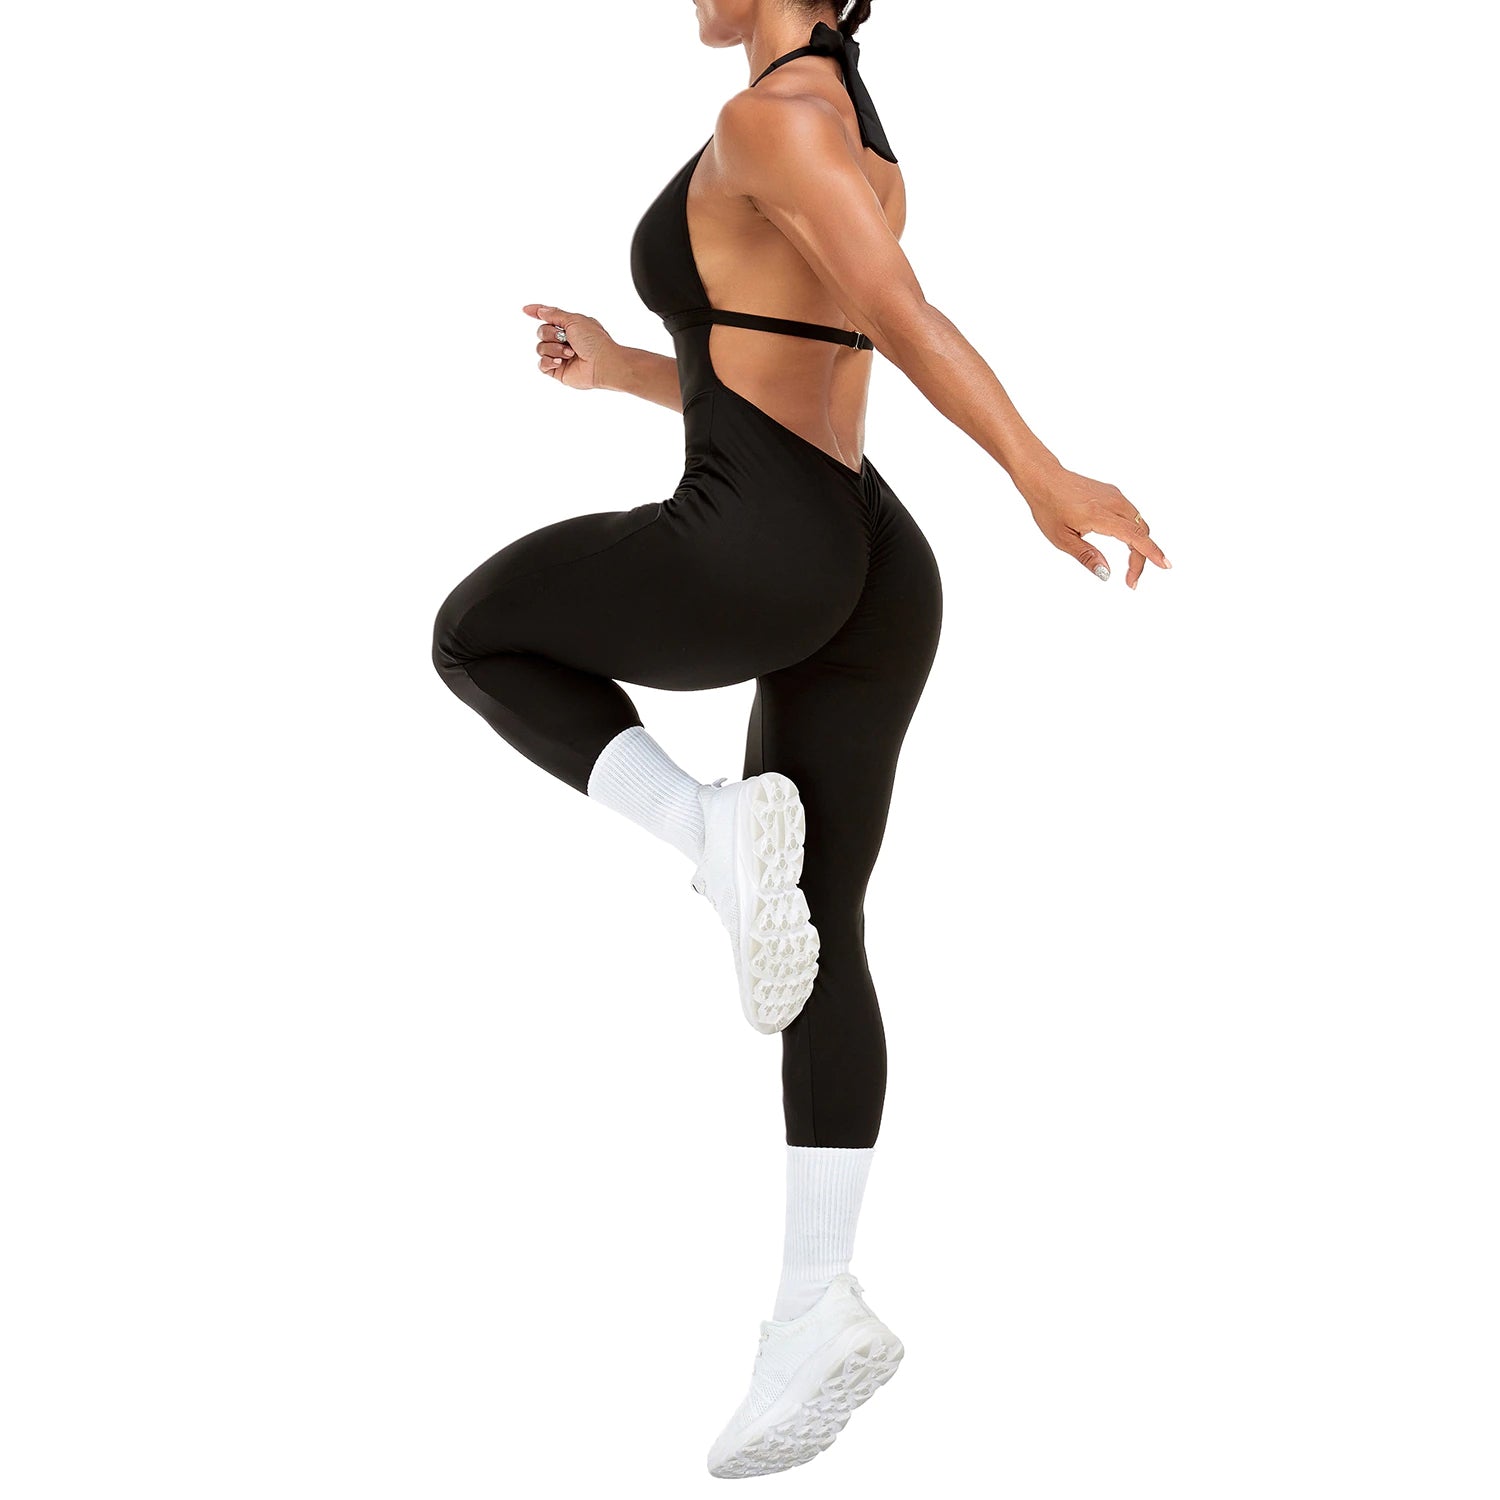 Women's Jumpsuit Onesie Workout Sets Bodysuit Yoga Fitness Gym Workout  Tummy Control Butt Lift Breathable Sport Activewear